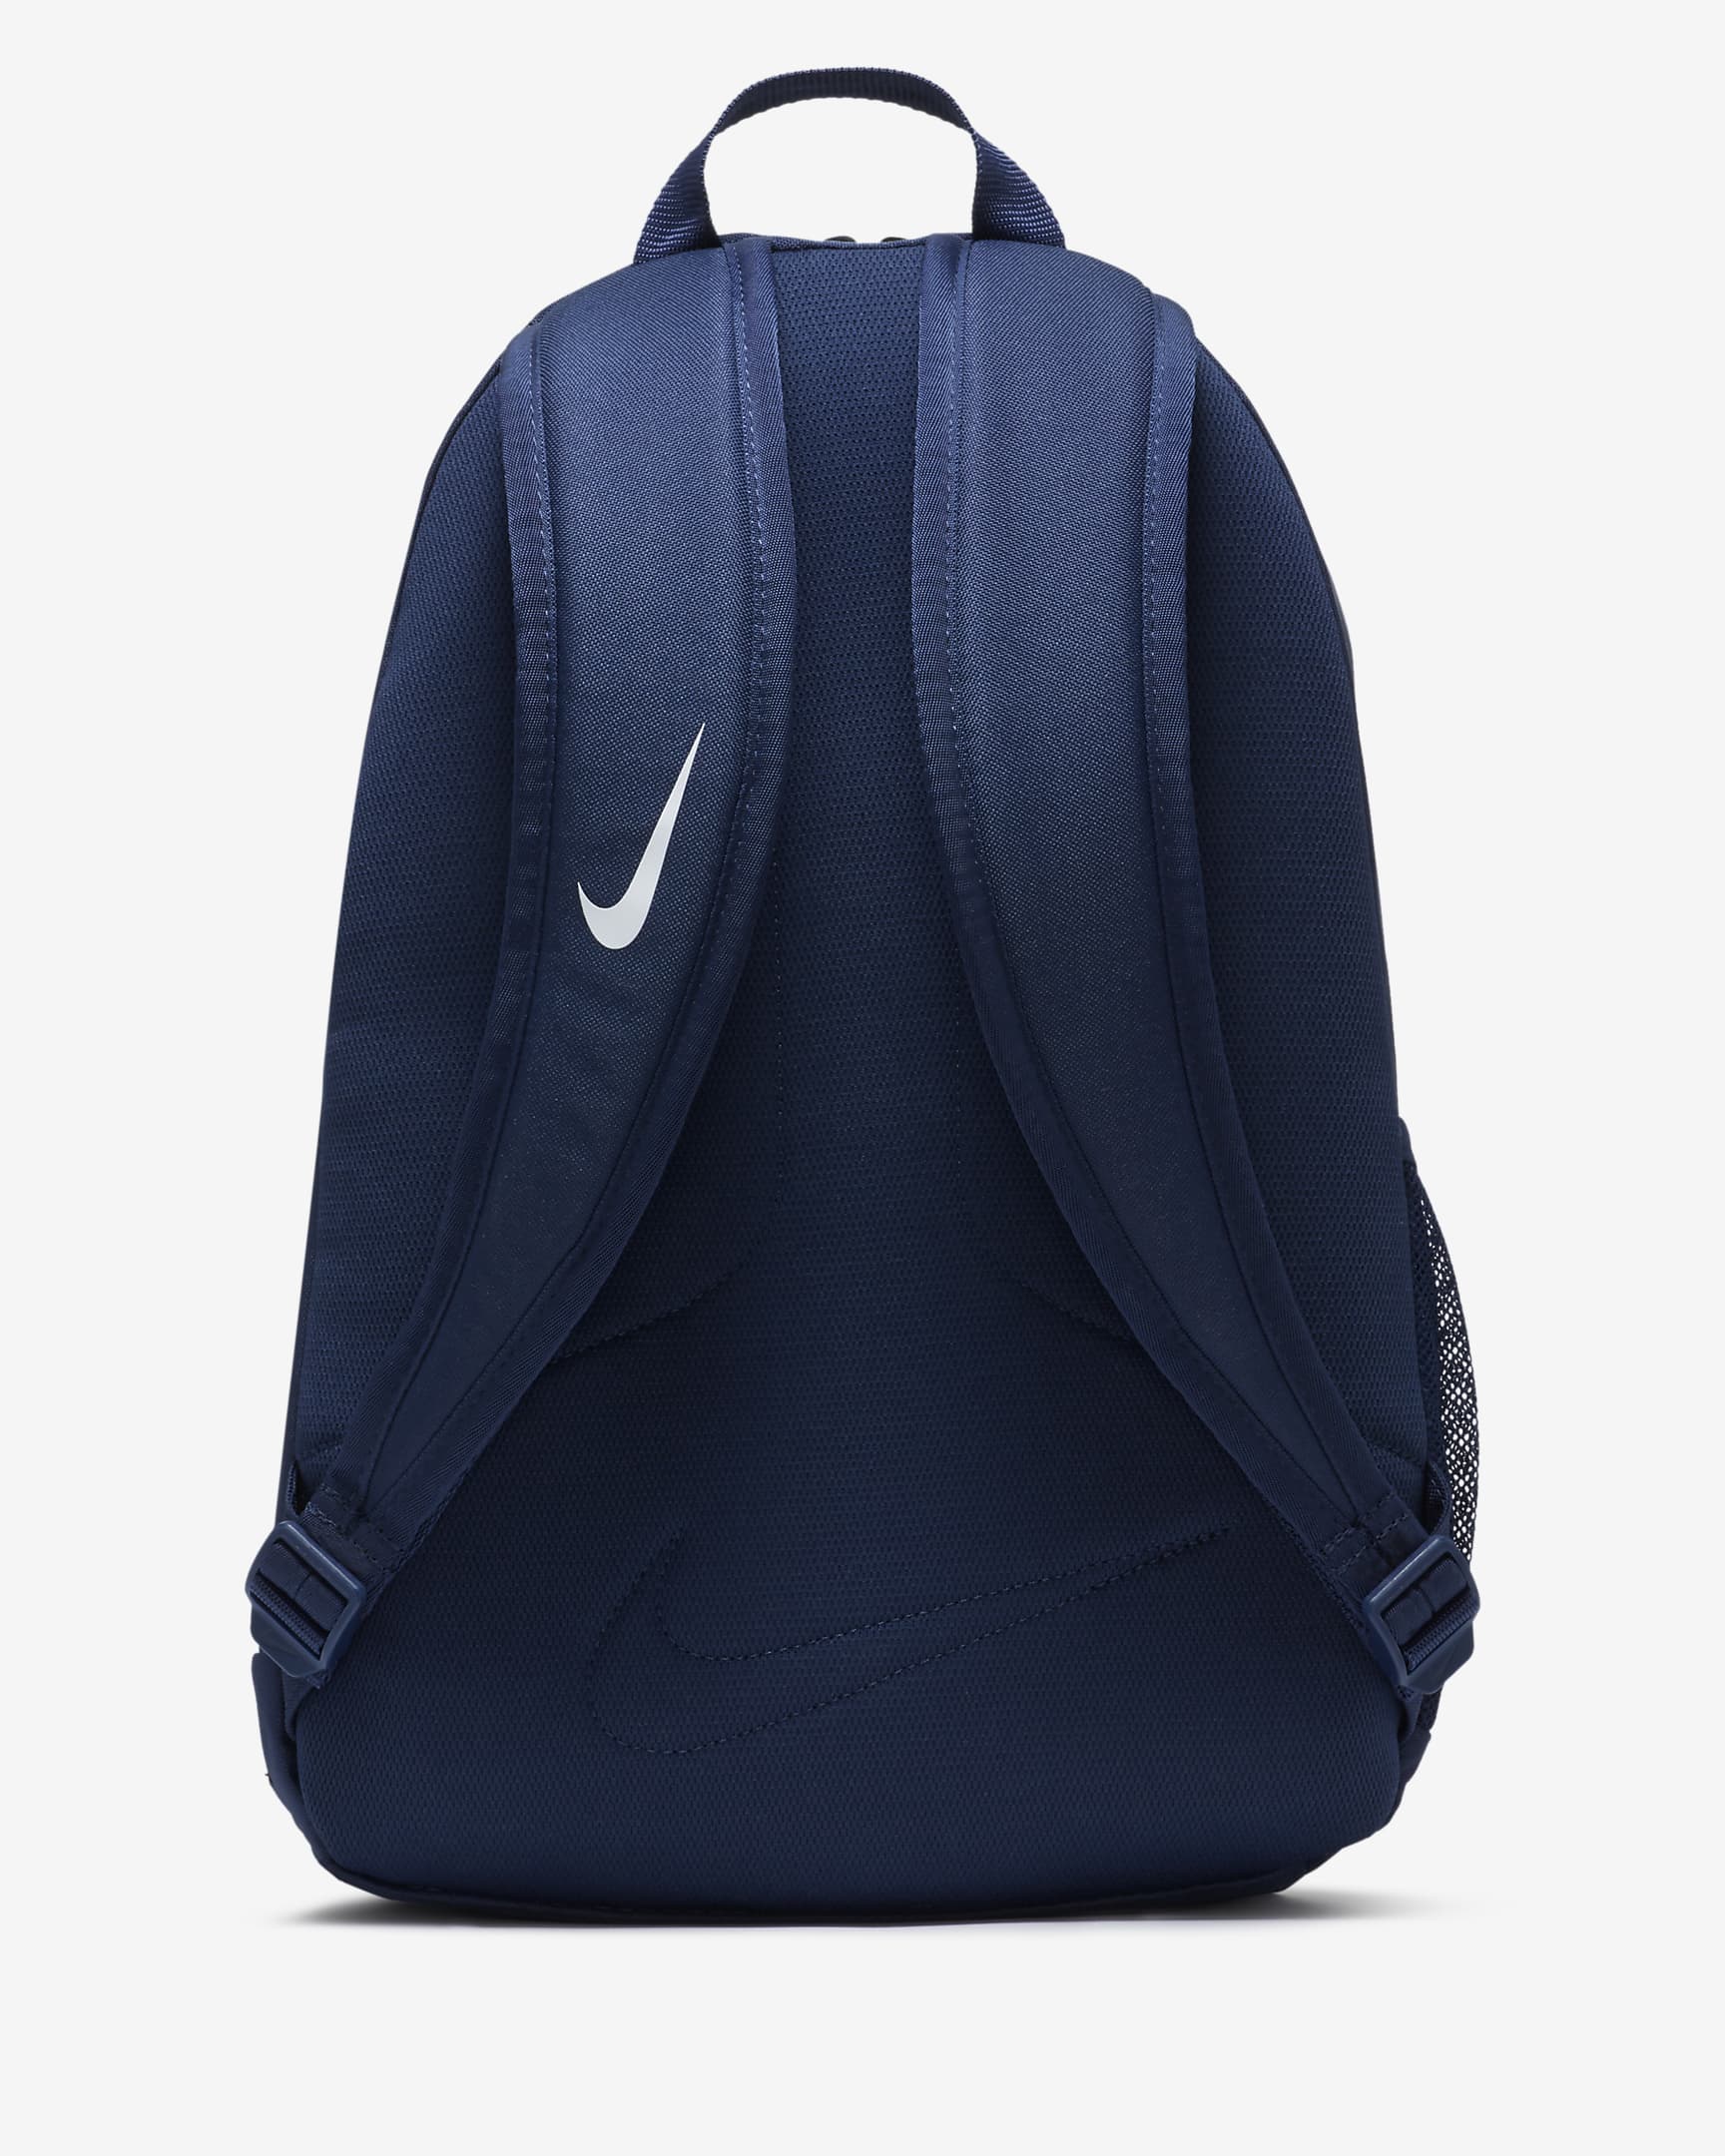 Nike Academy Team Kids' Football Backpack (22L) - Midnight Navy/Black/White